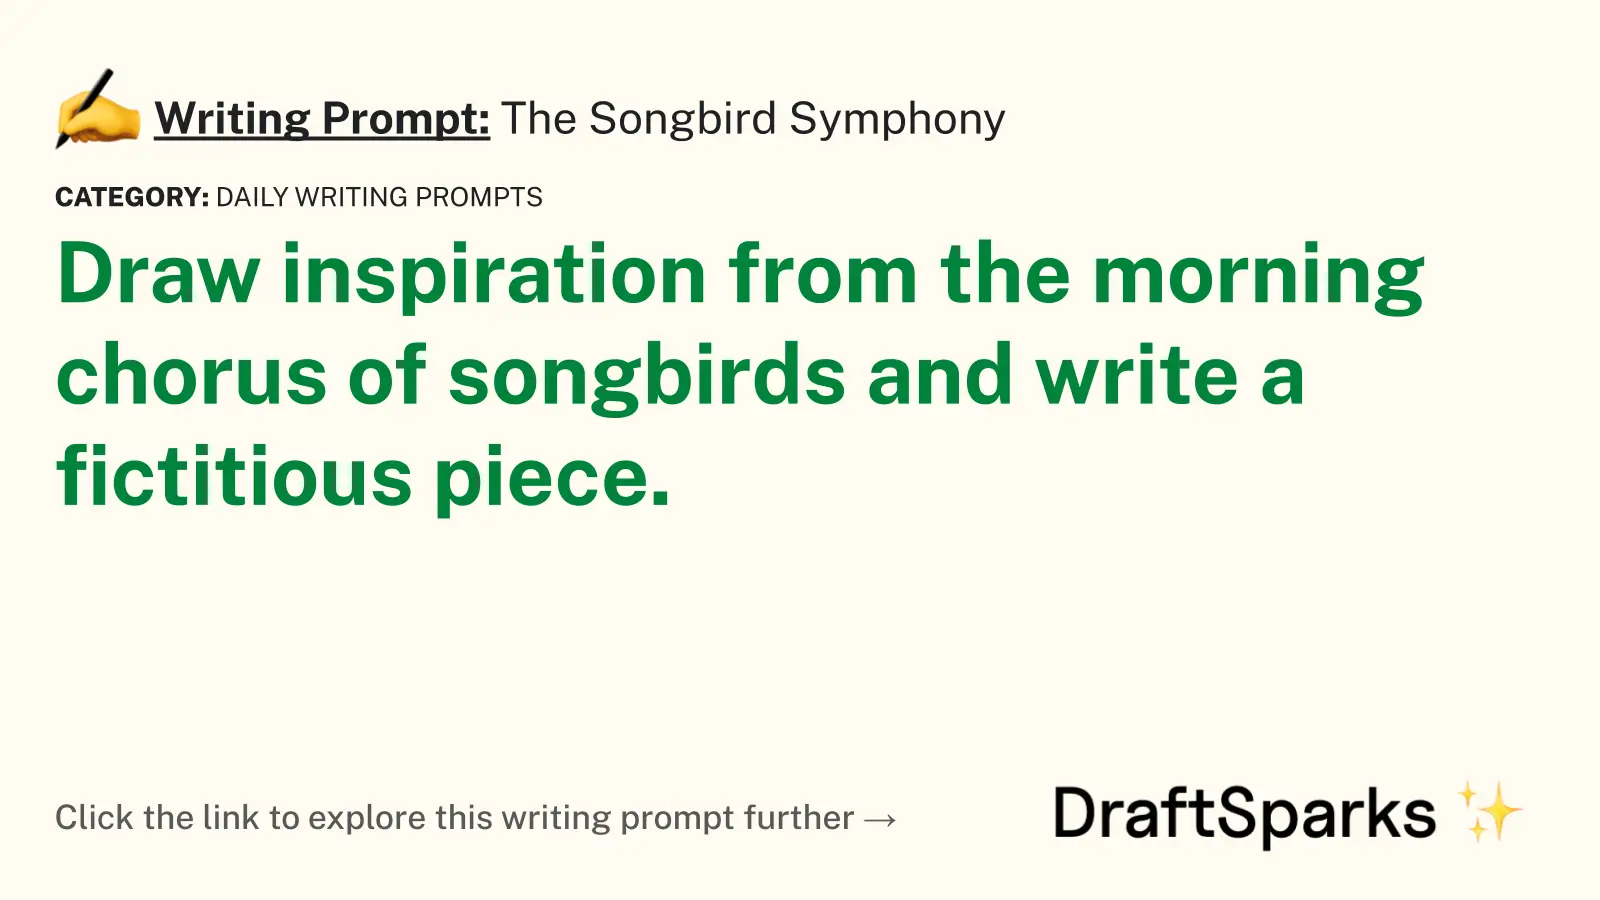 The Songbird Symphony